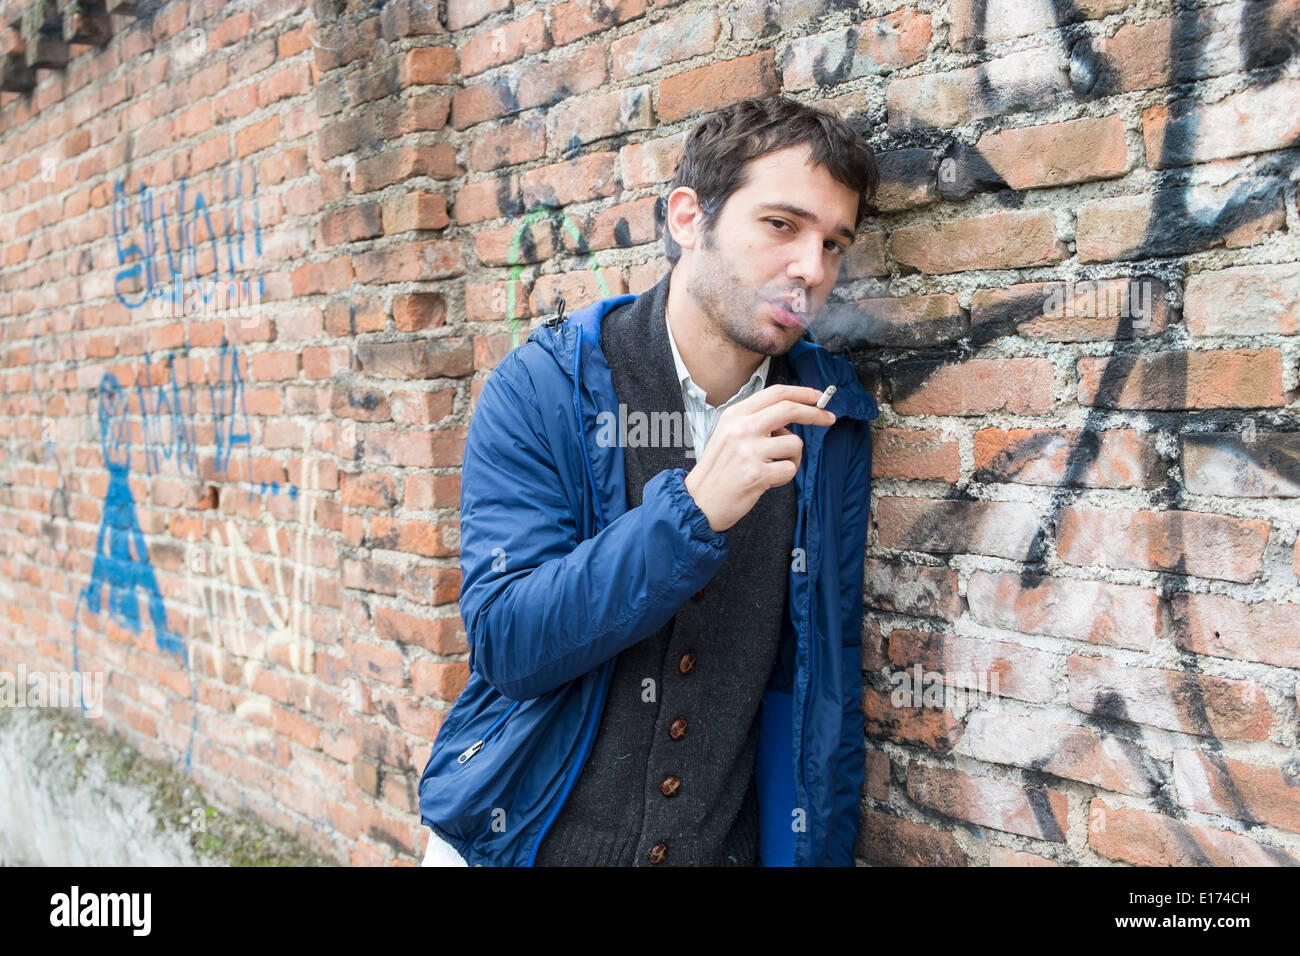 Man addicted smoker Stock Photo